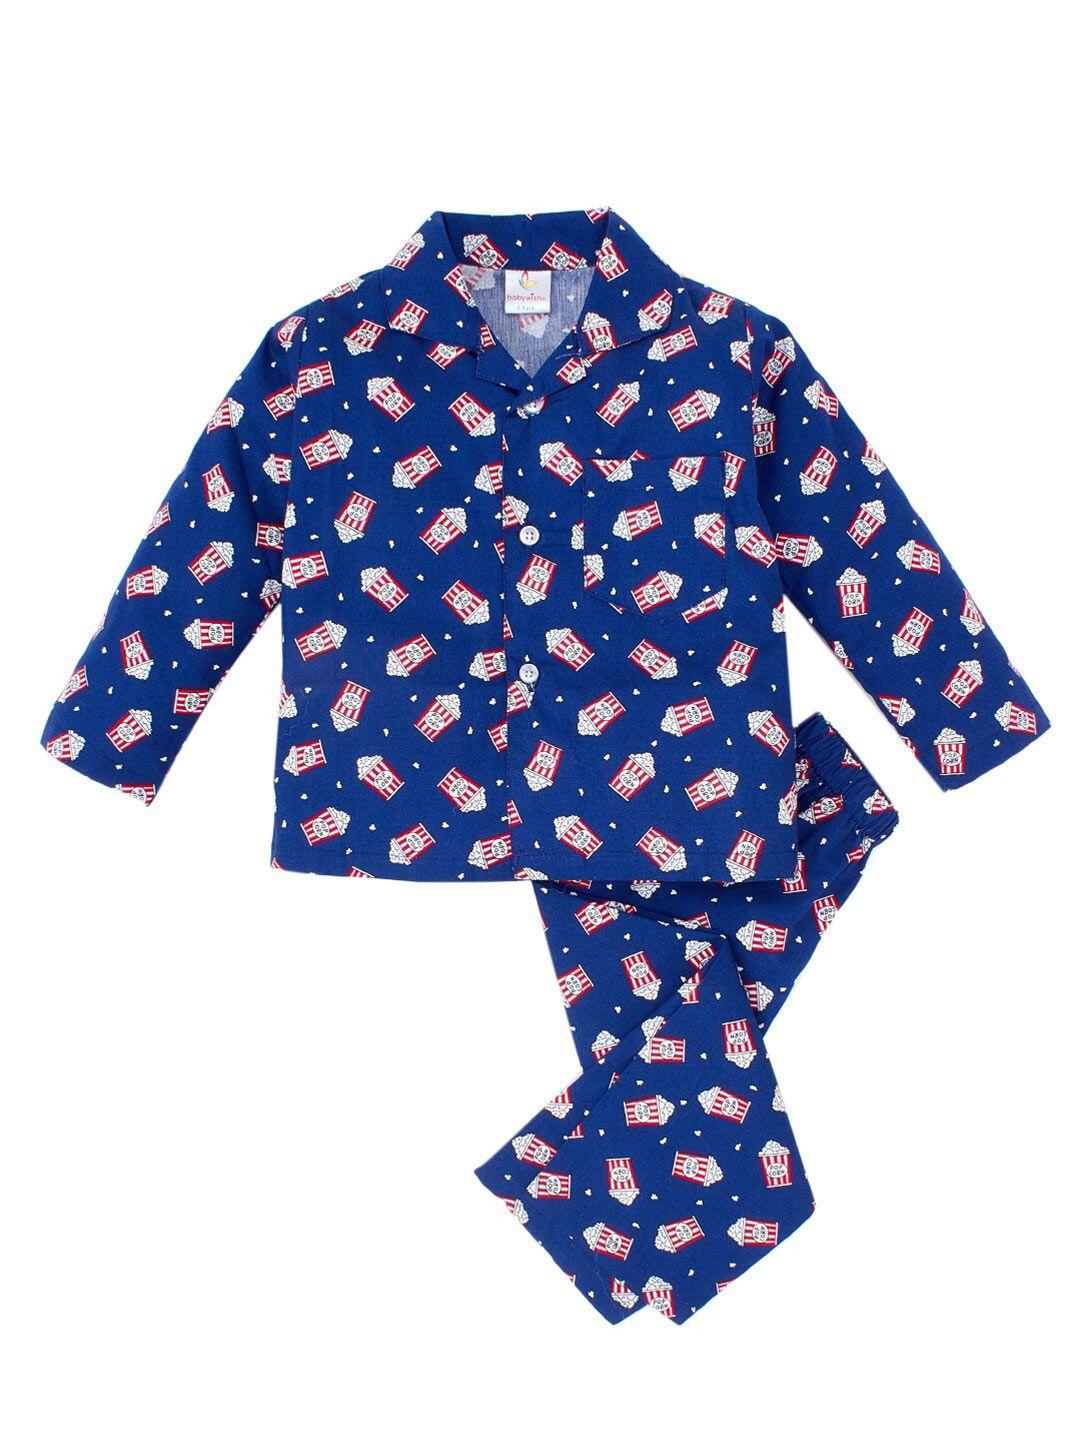 babywish unisex kids printed night suit